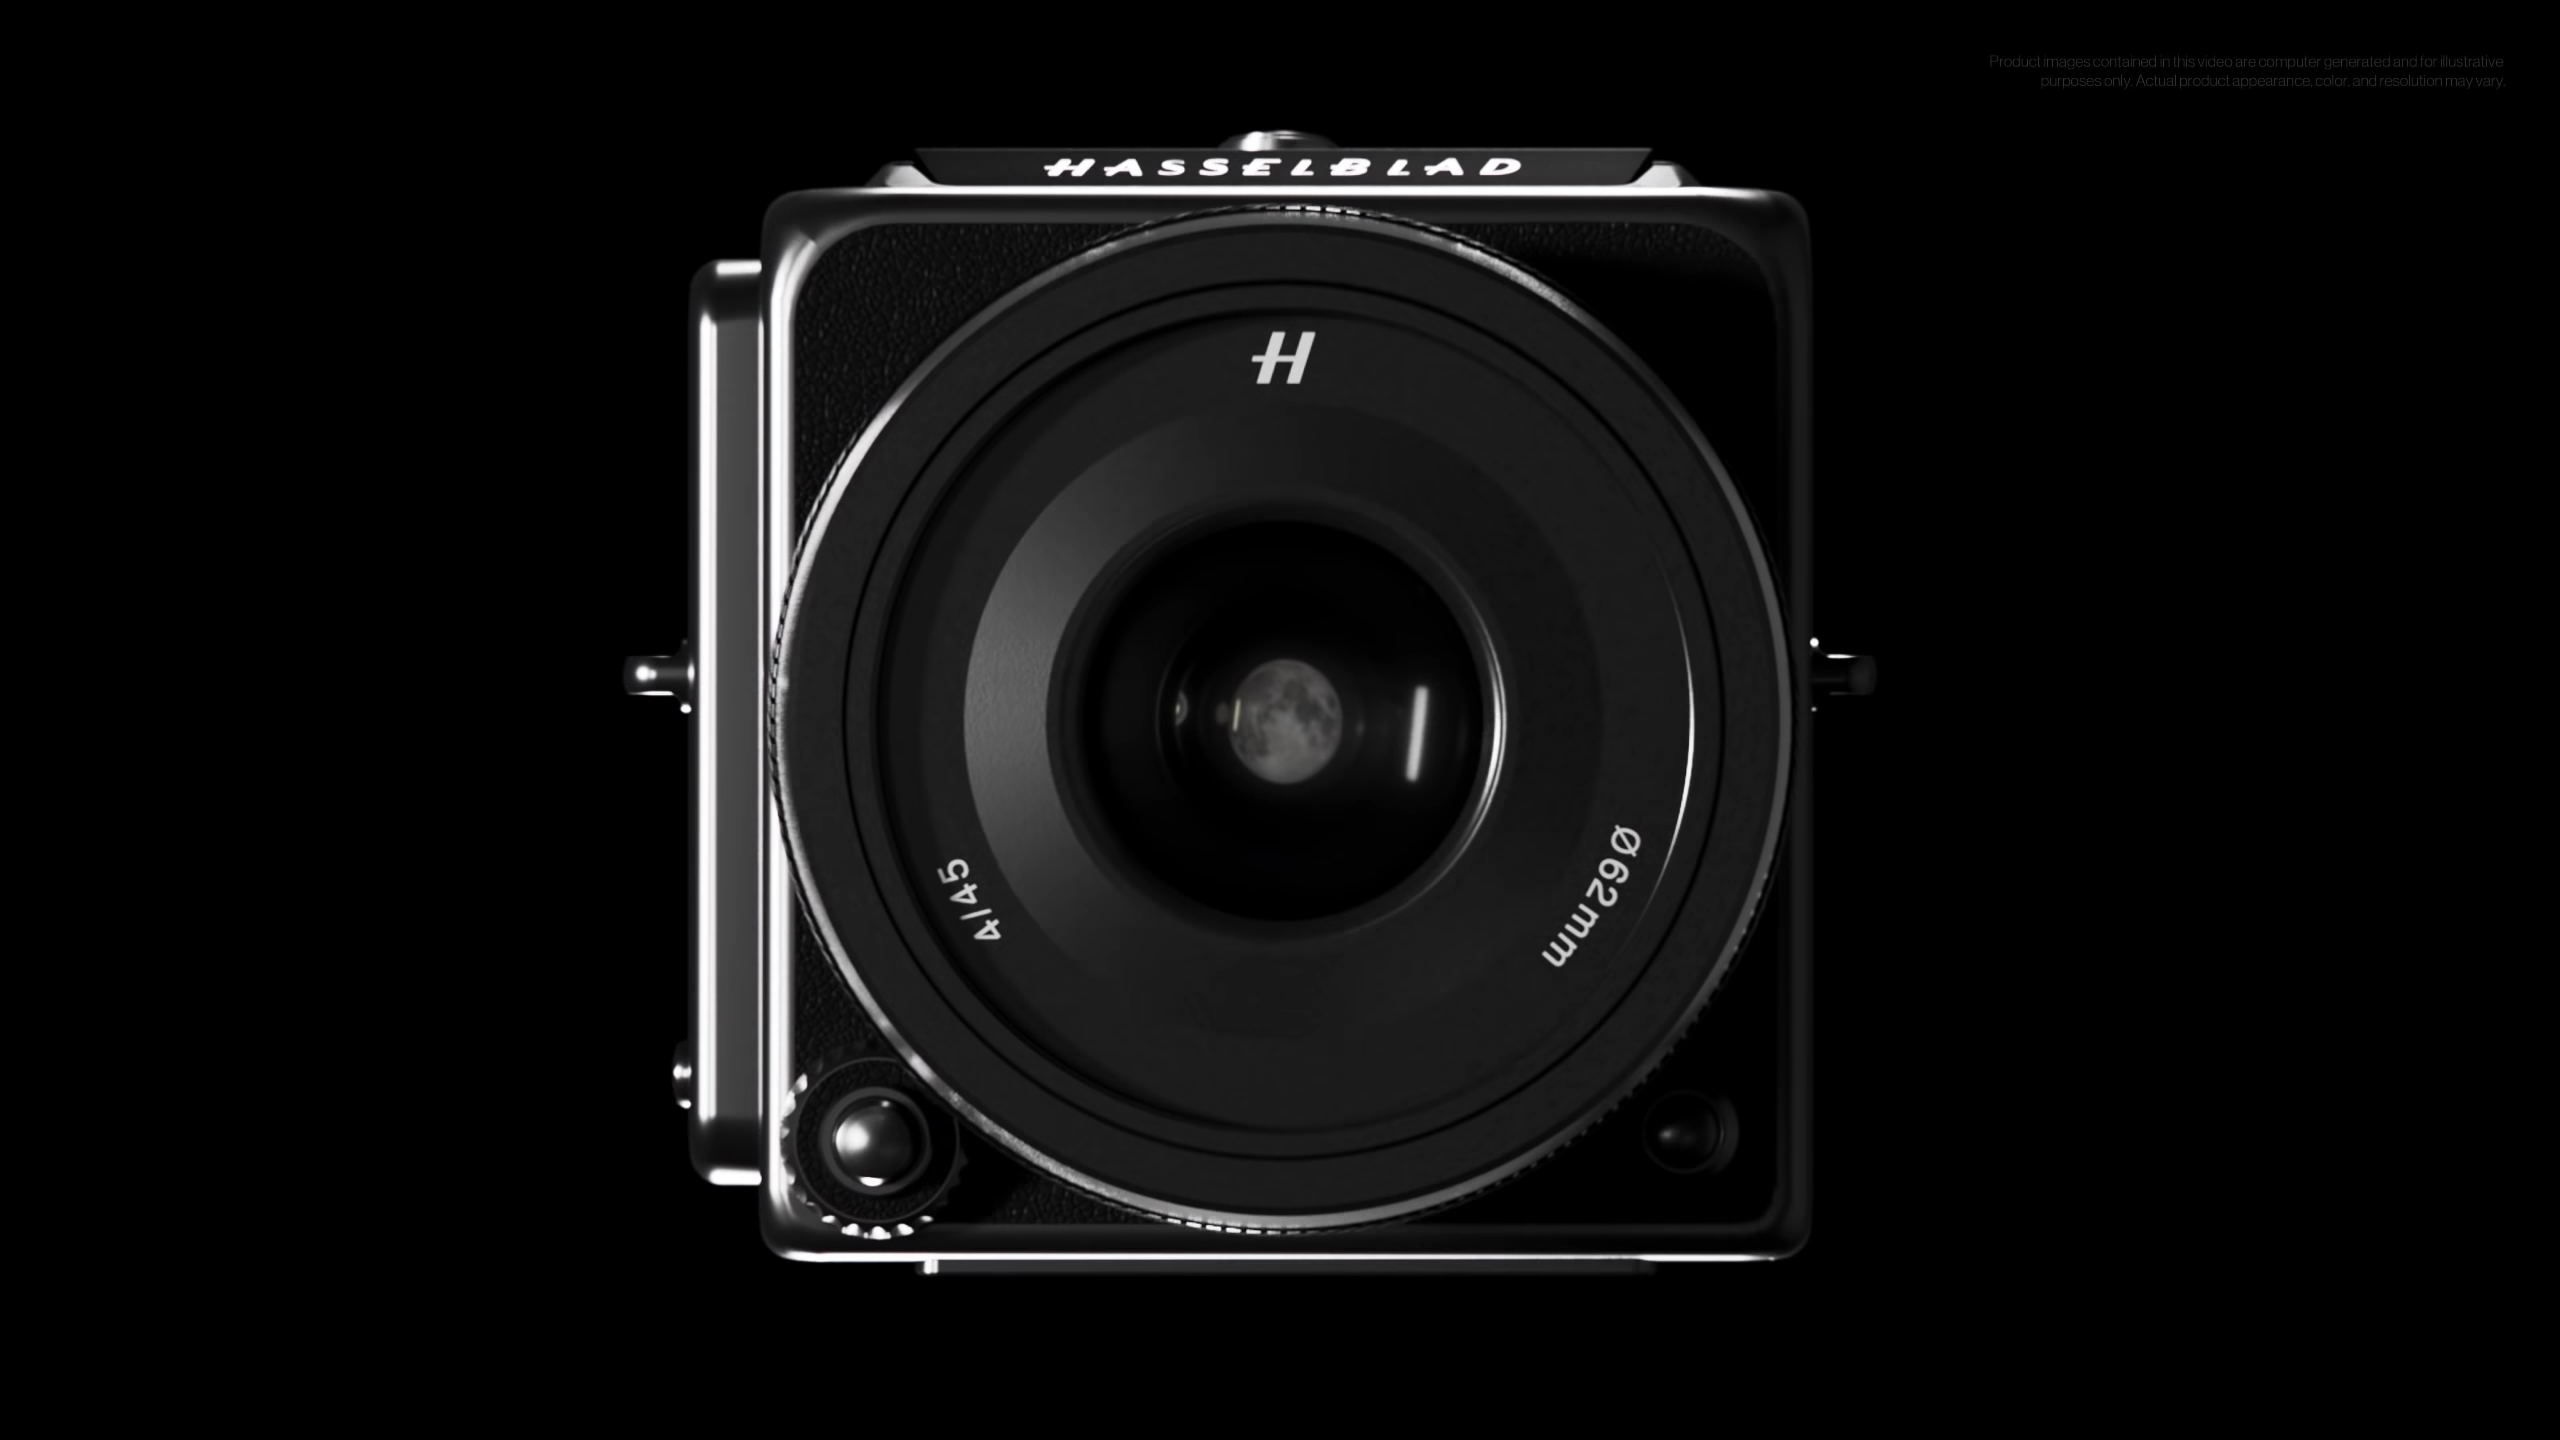 OnePlus Hasselblad Kamera chin an tap